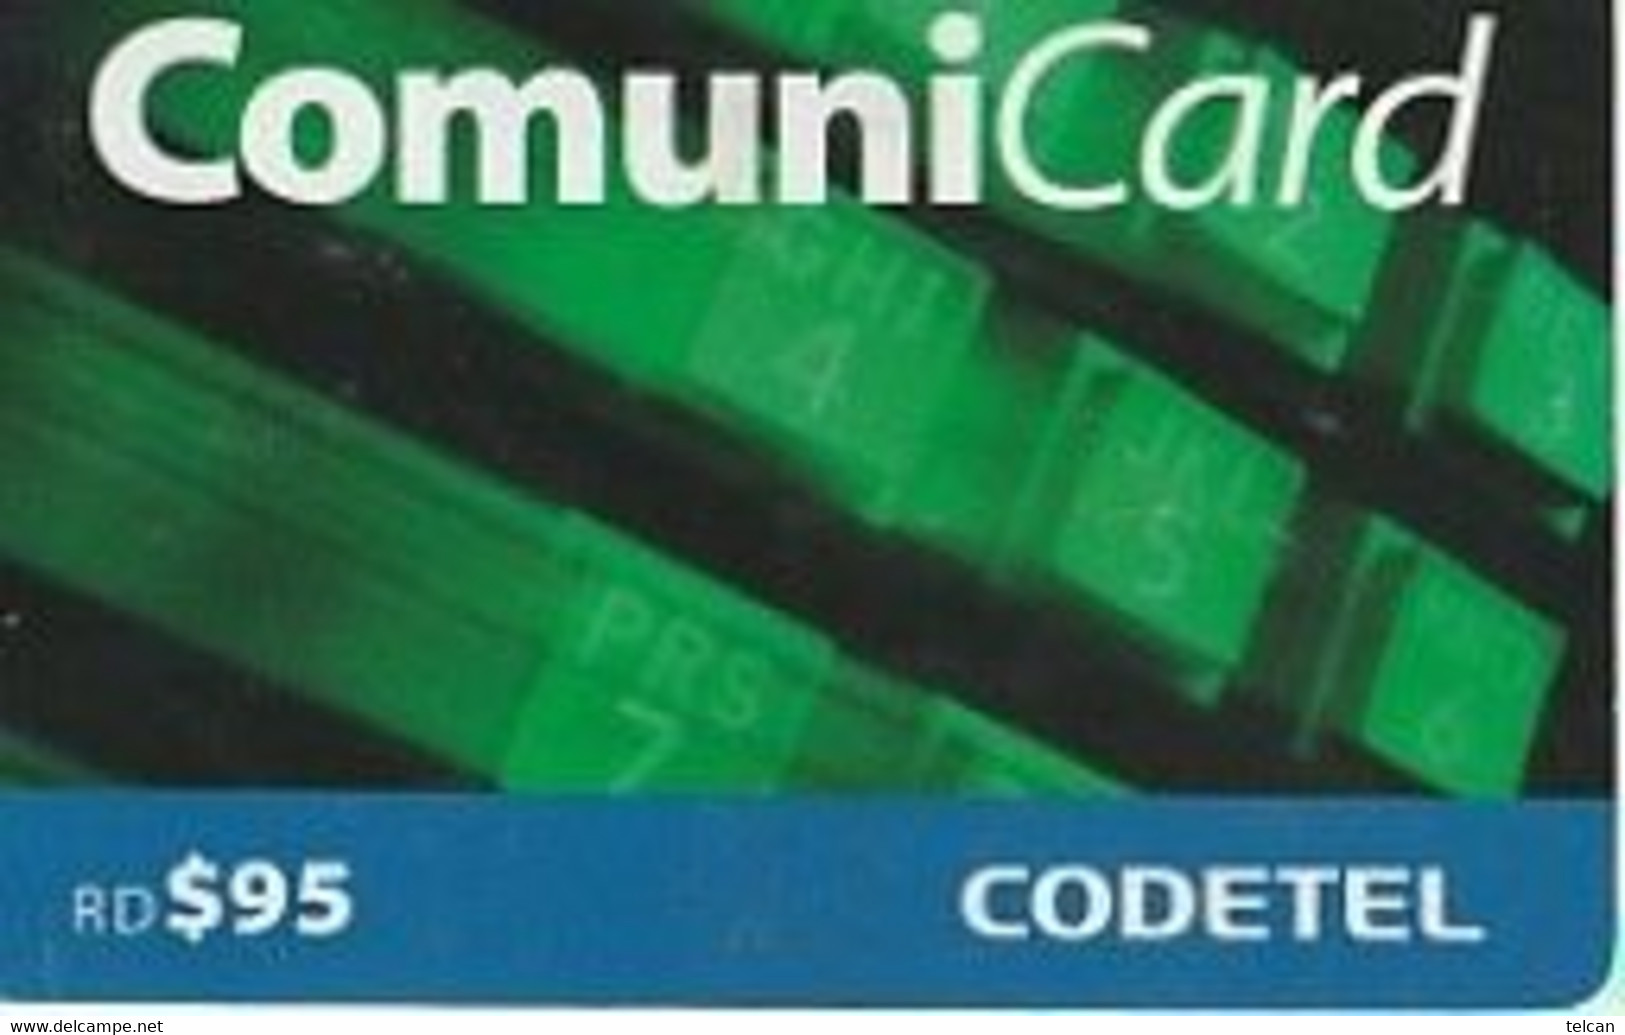 COMMUNICARD $95 - Dominicana